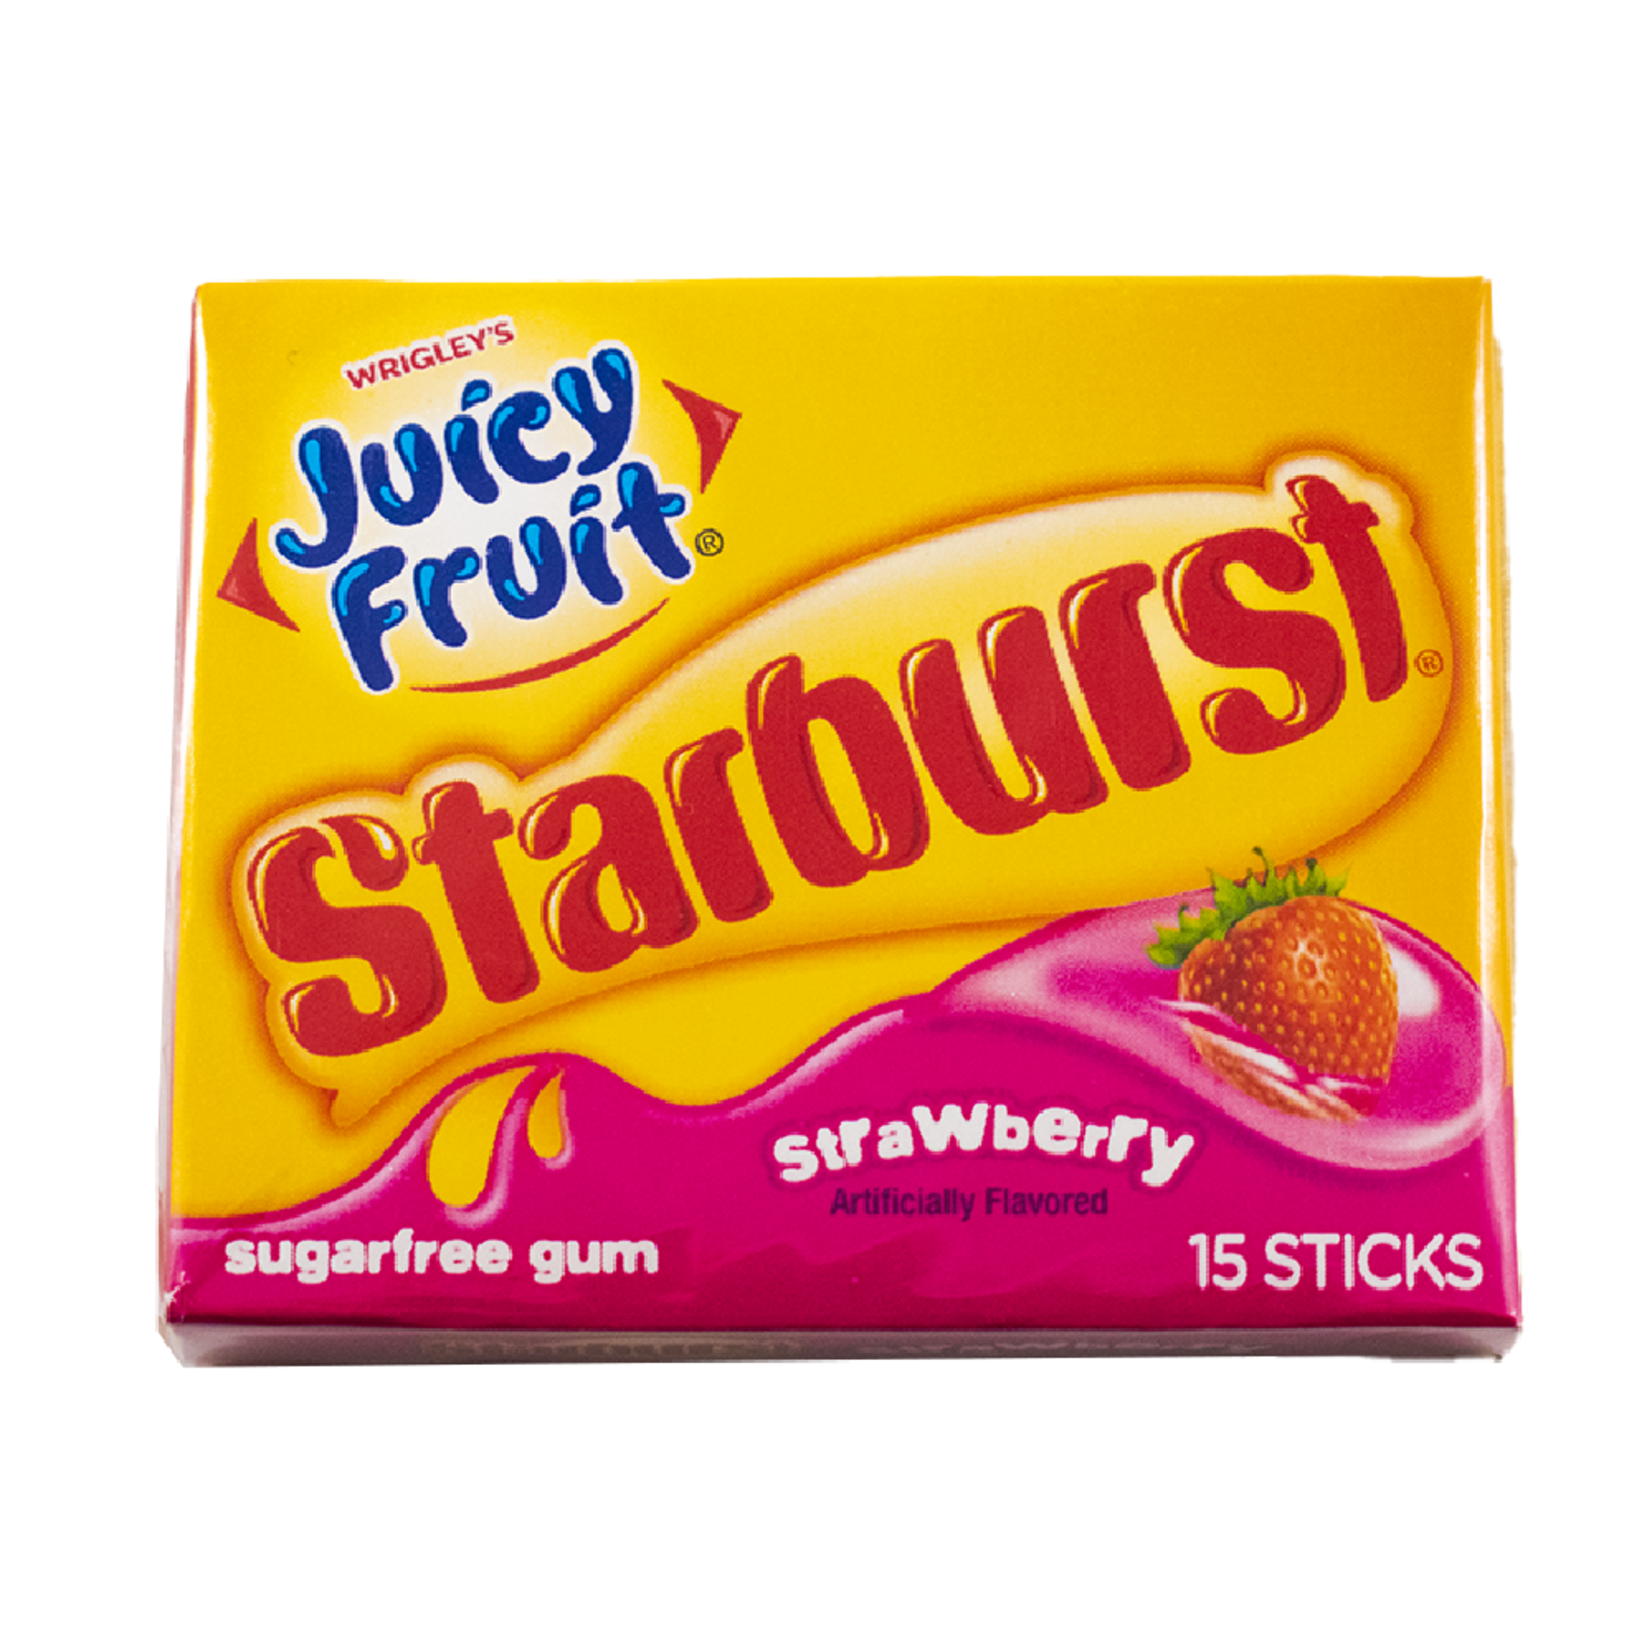 Juicy Fruit Starburst Strawberry